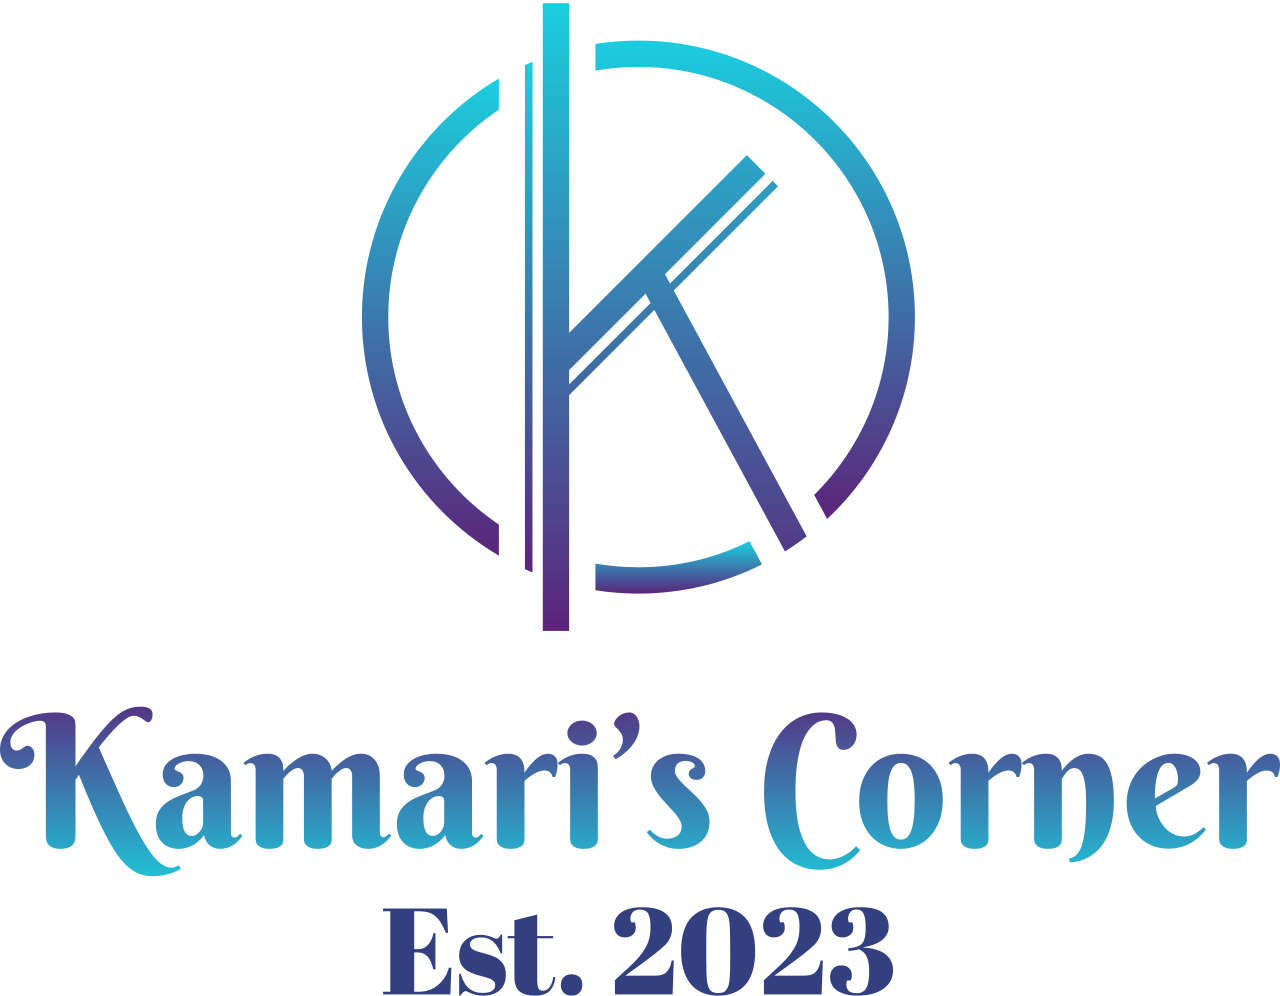 Kamari’s Corner's logo